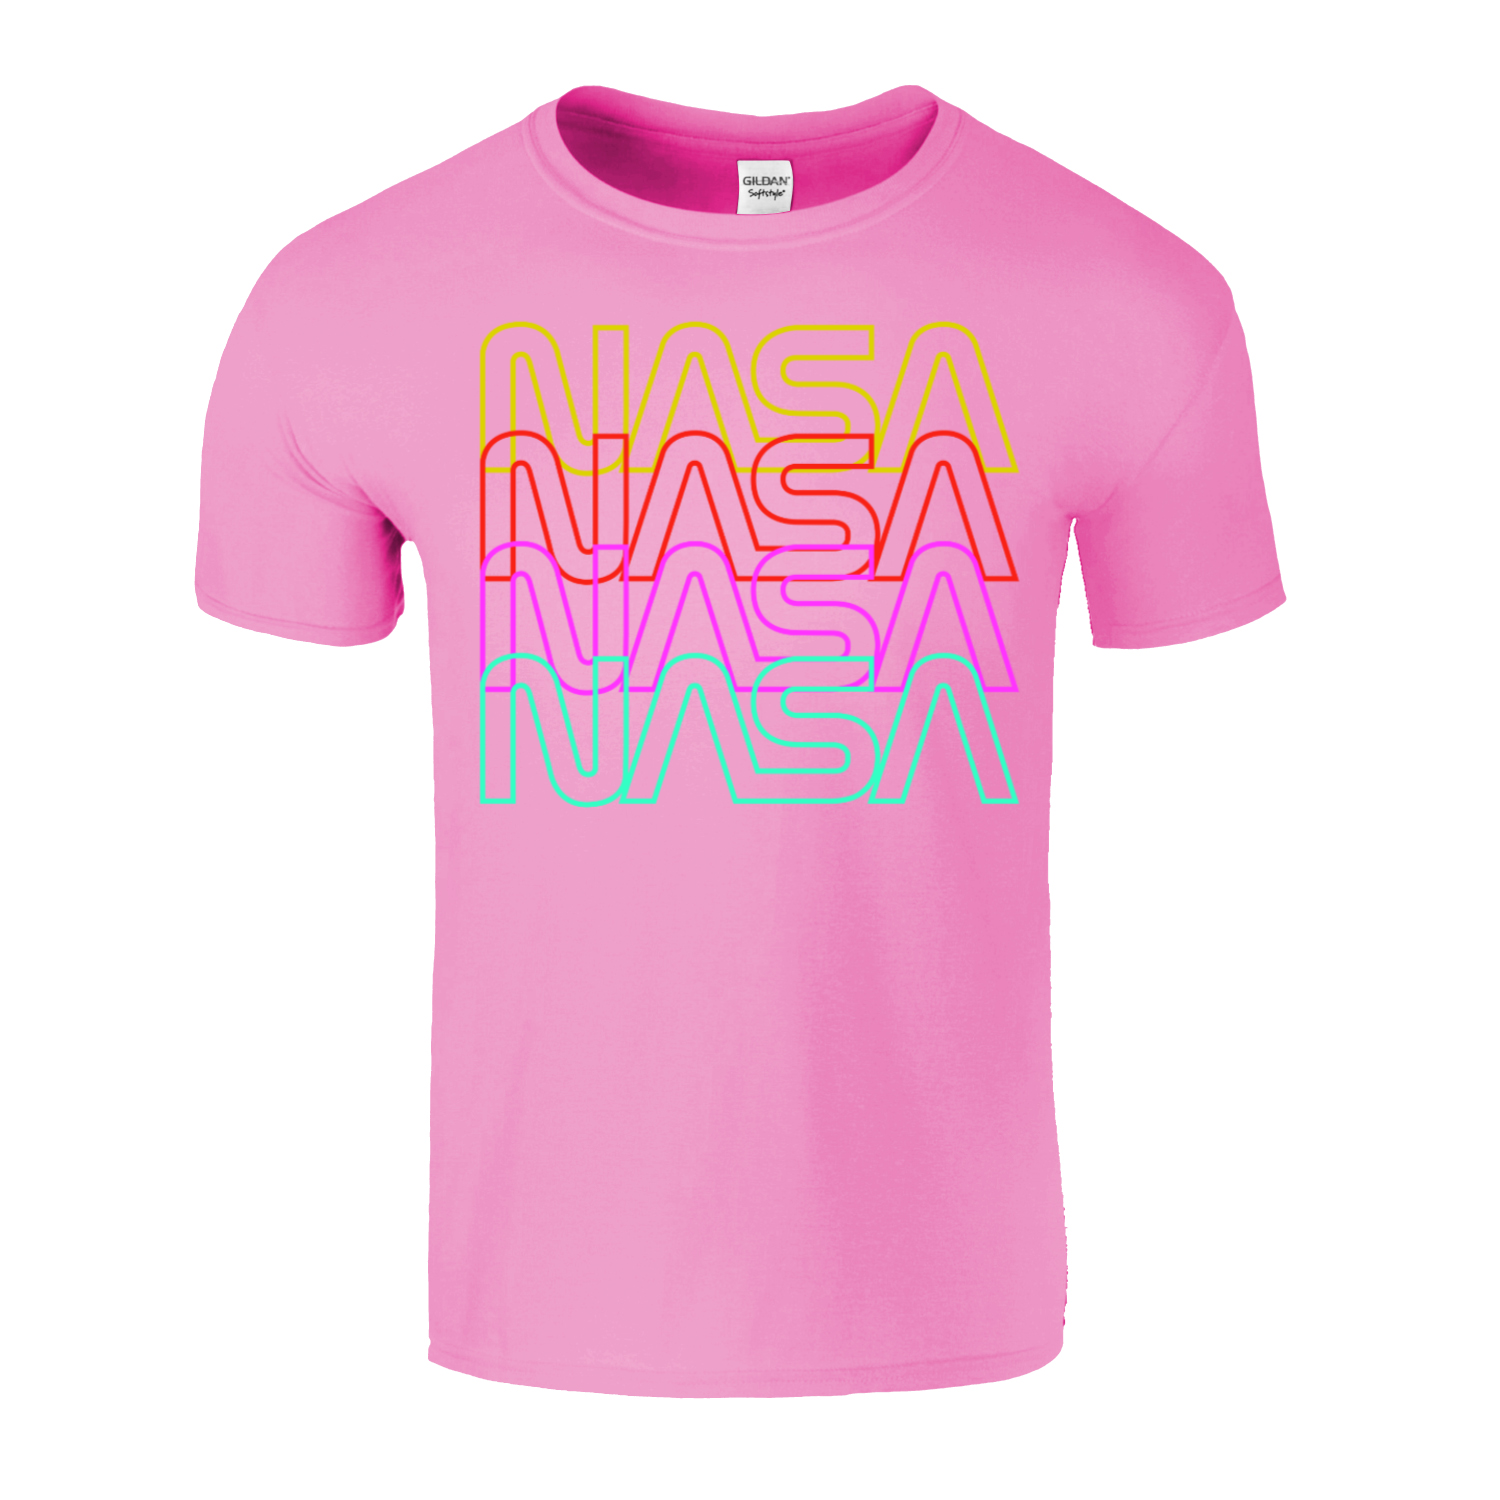 NASA Worm T-Shirt